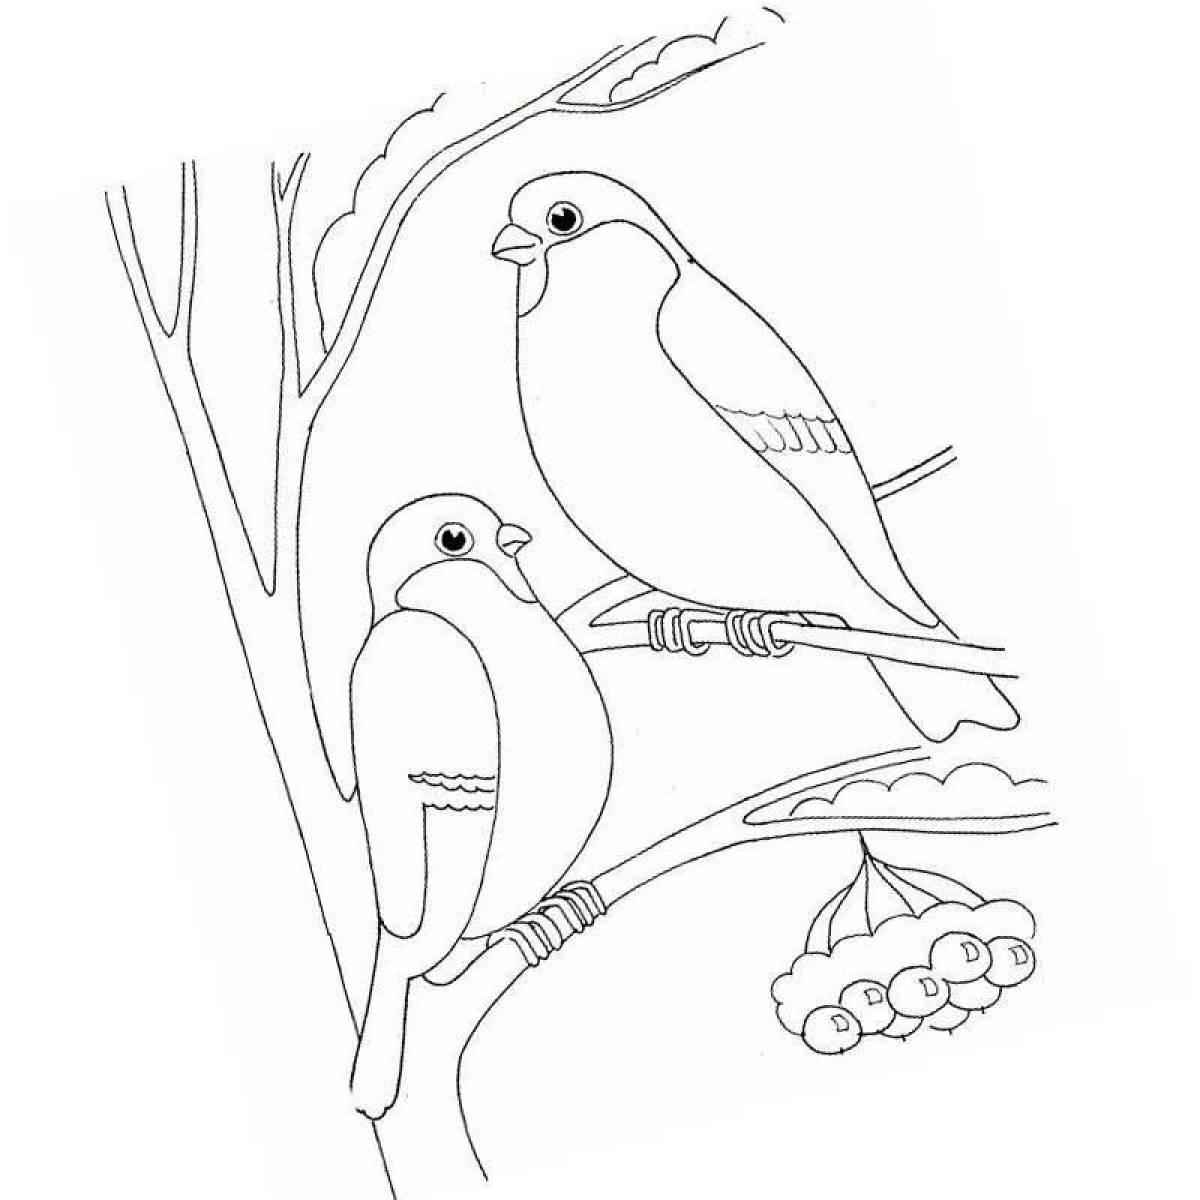 Wintering birds for children 4 5 #4